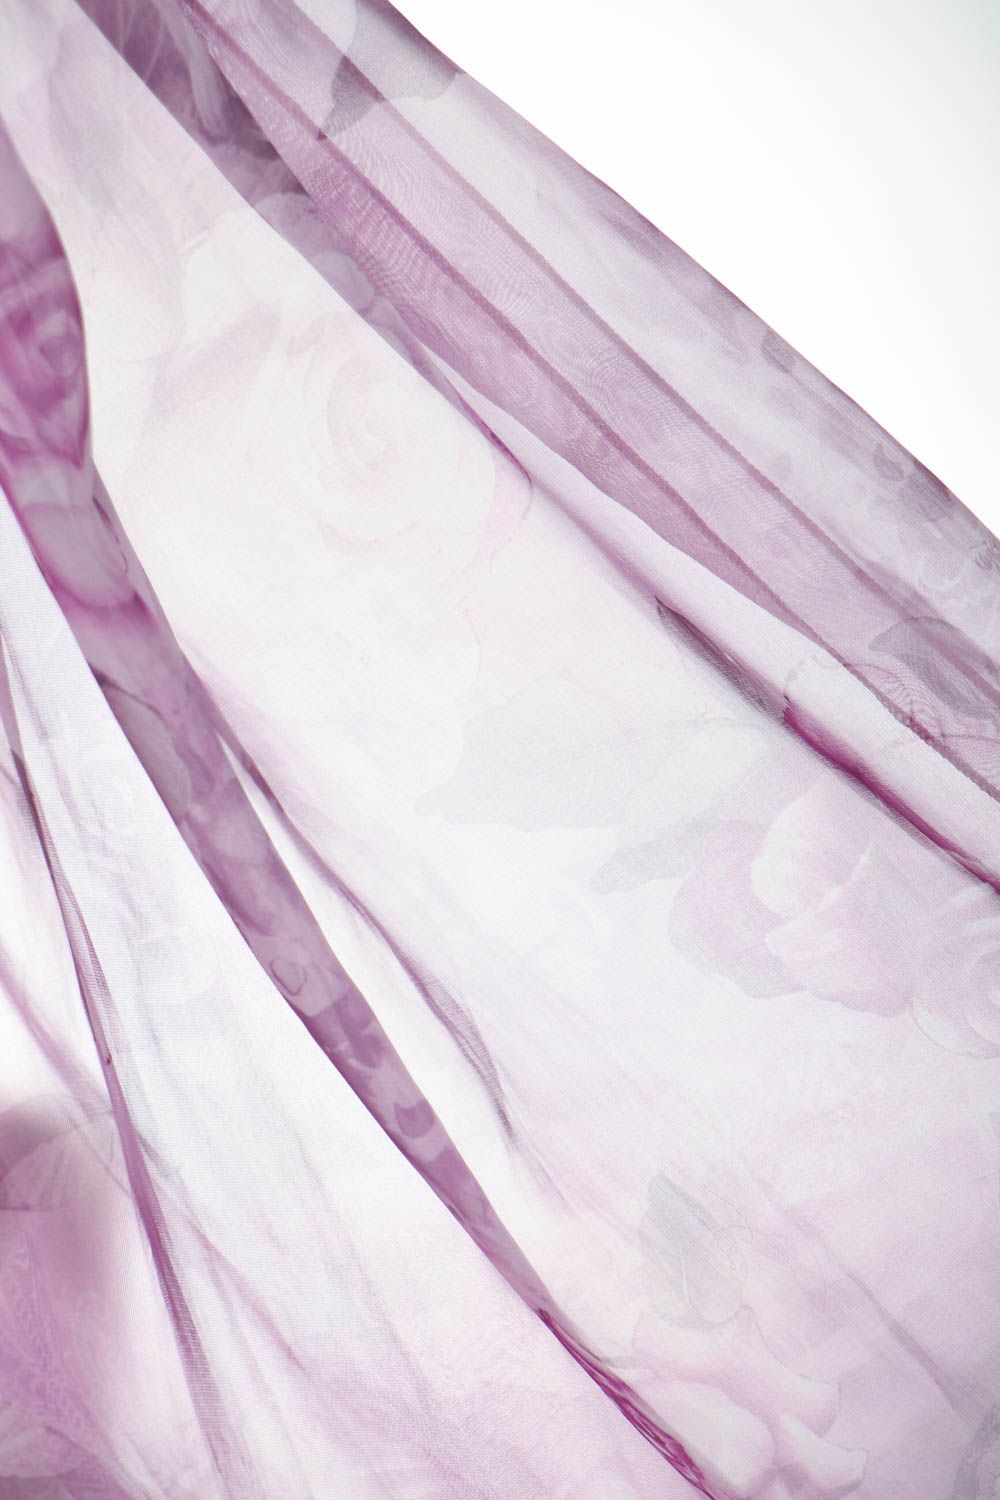 Thin violet scarf photo 4